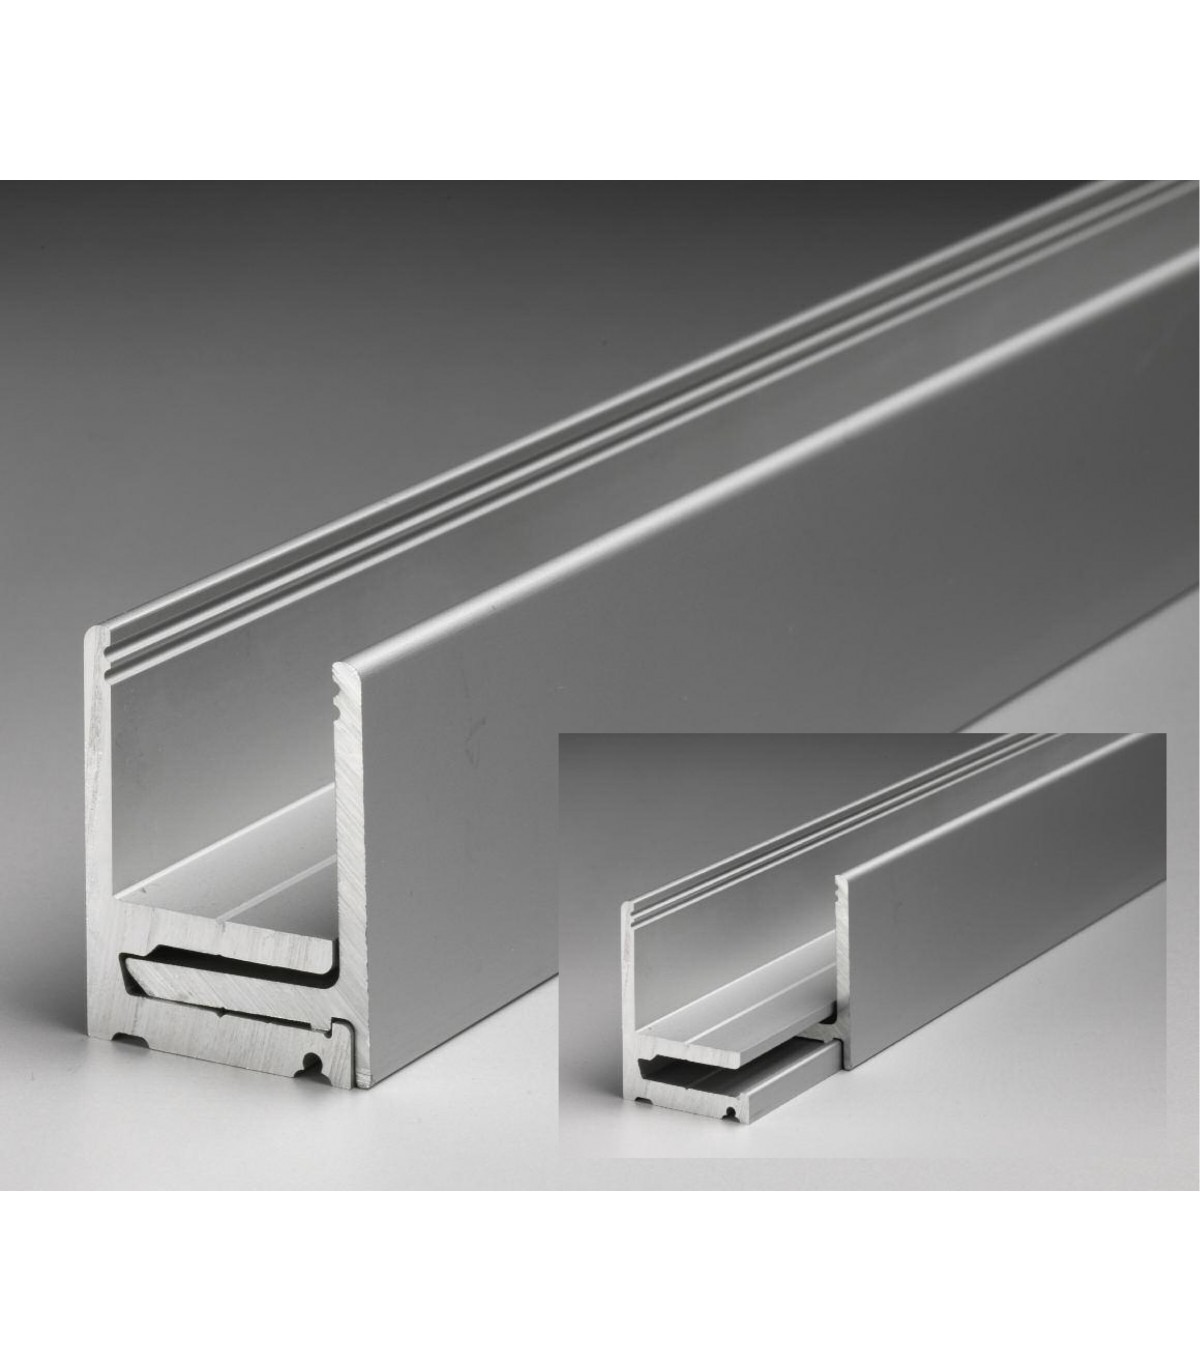 Profil aluminium avec parclose 40.1 x 30.5 x 40.1 mm série Super Pr